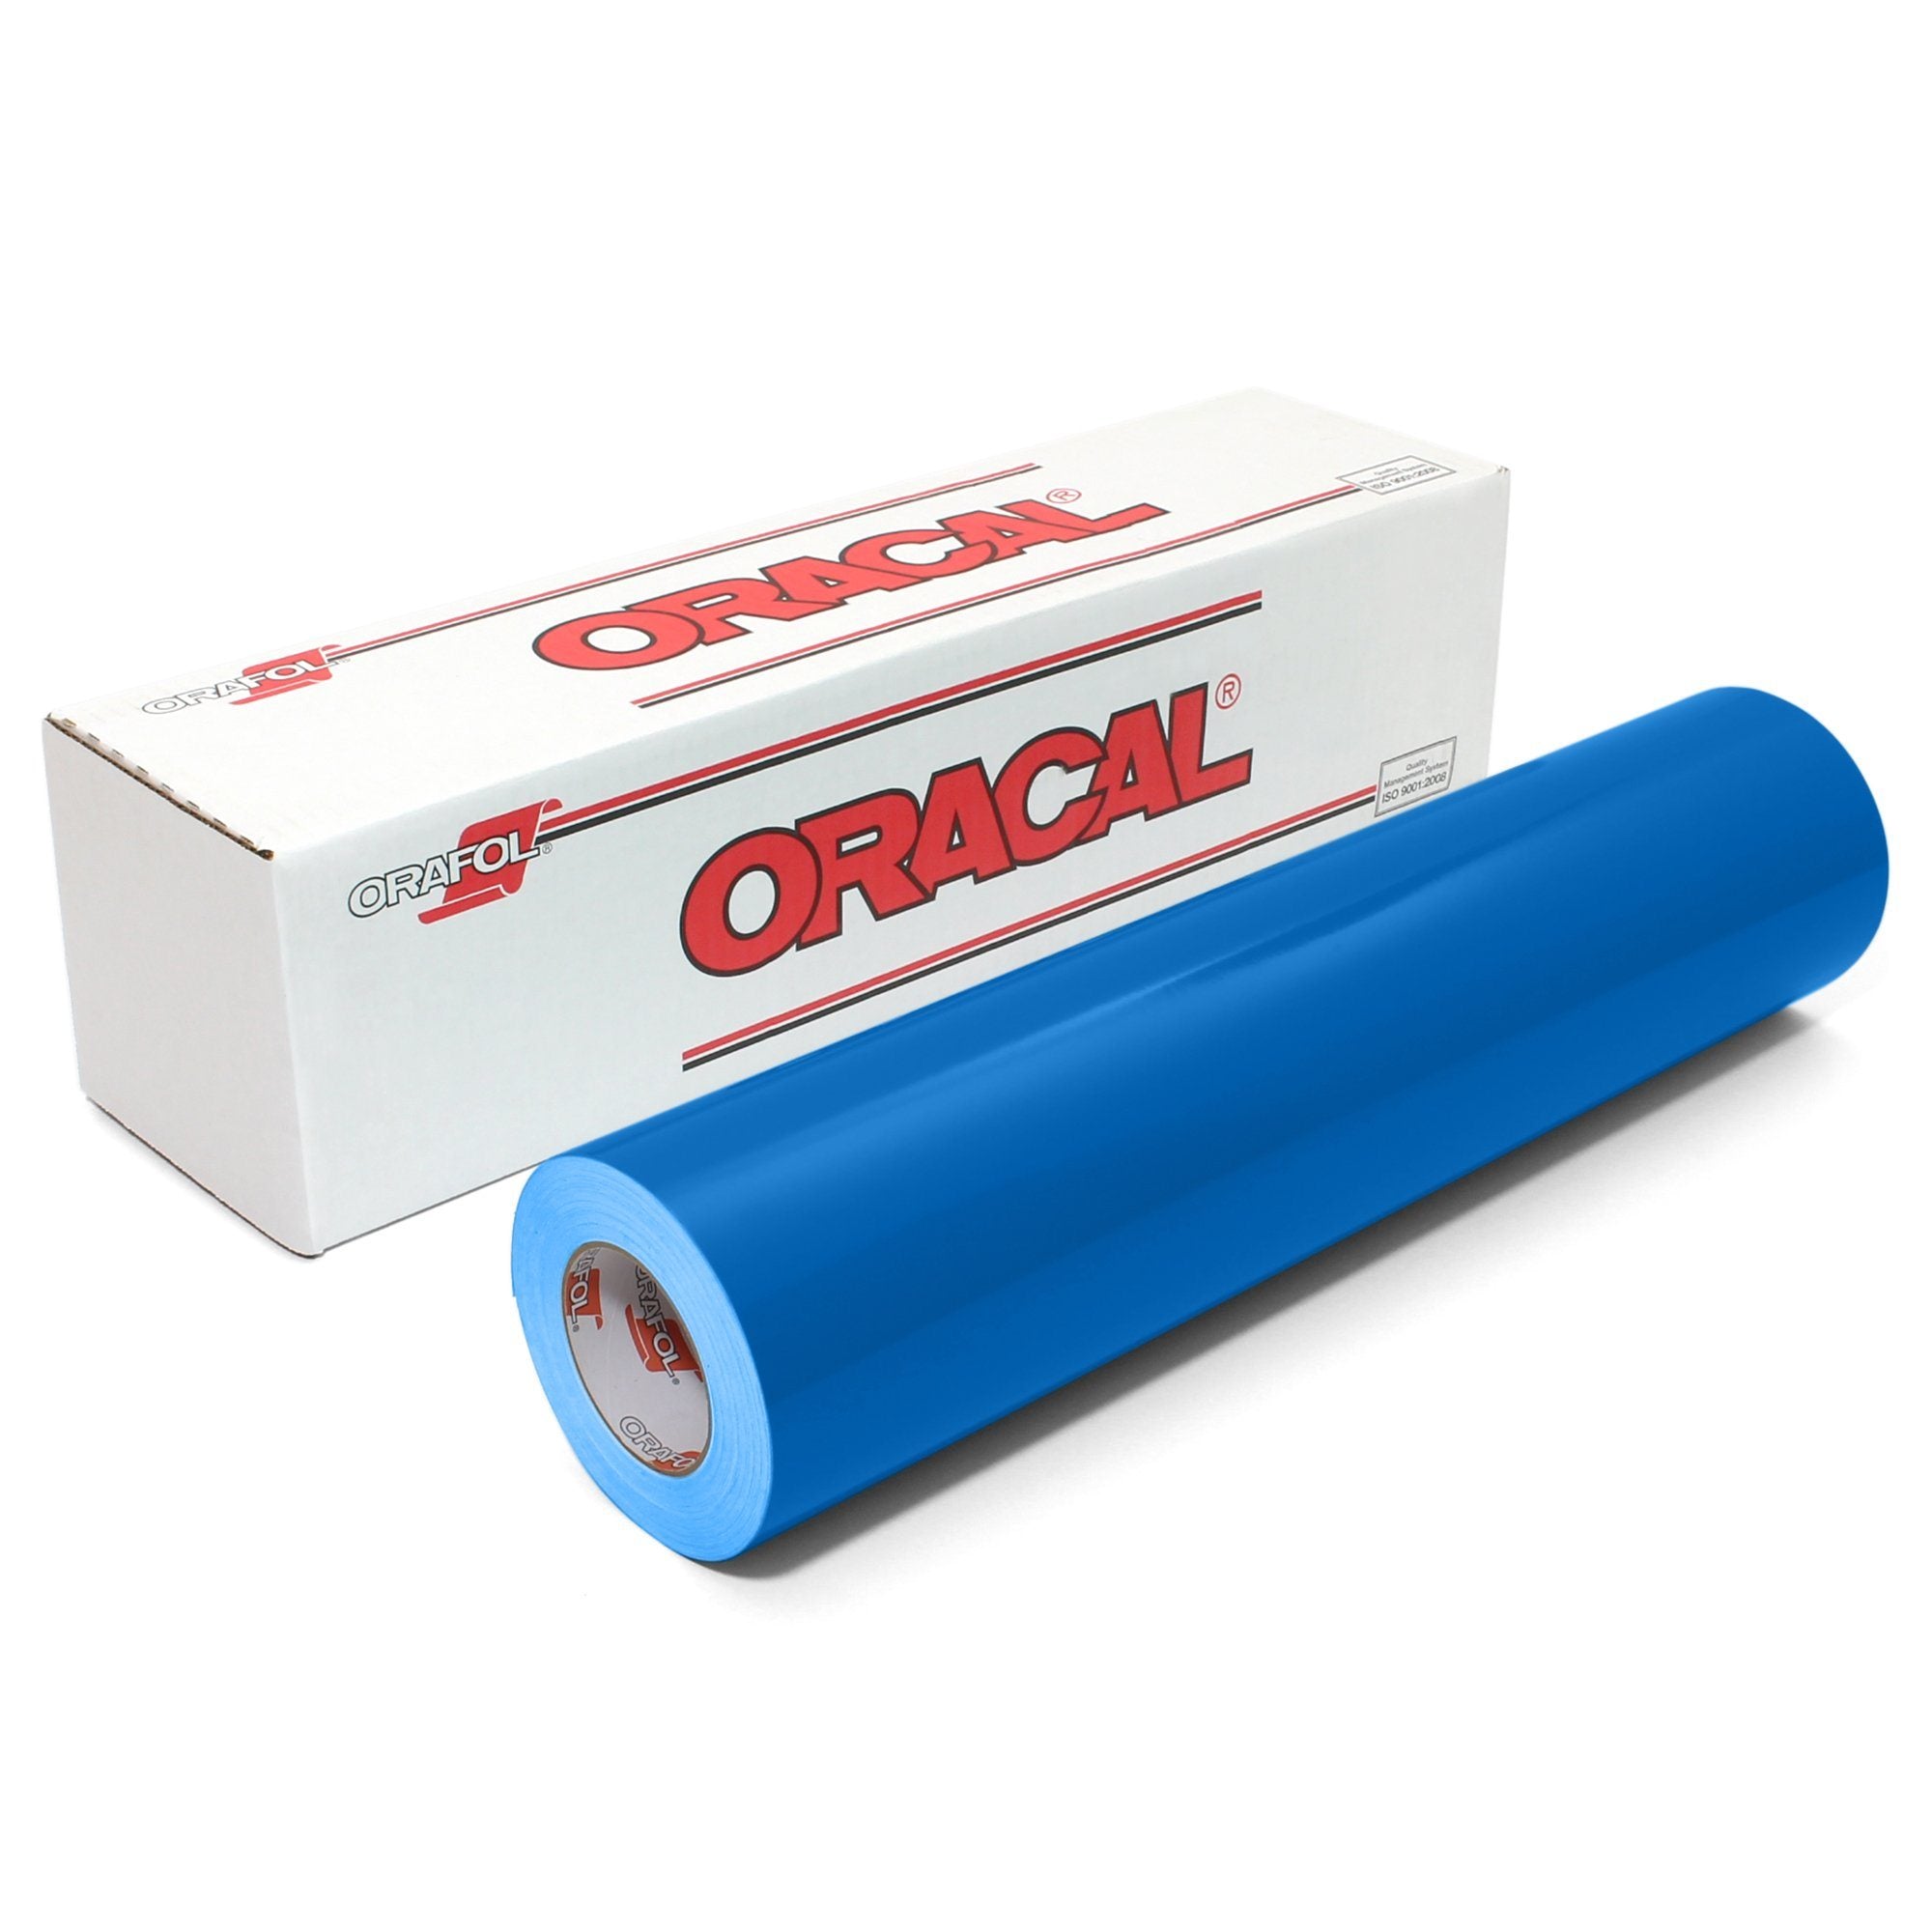 Oracal 651 Glossy Vinyl Rolls - Azure Blue, 12 inch x 6 Foot